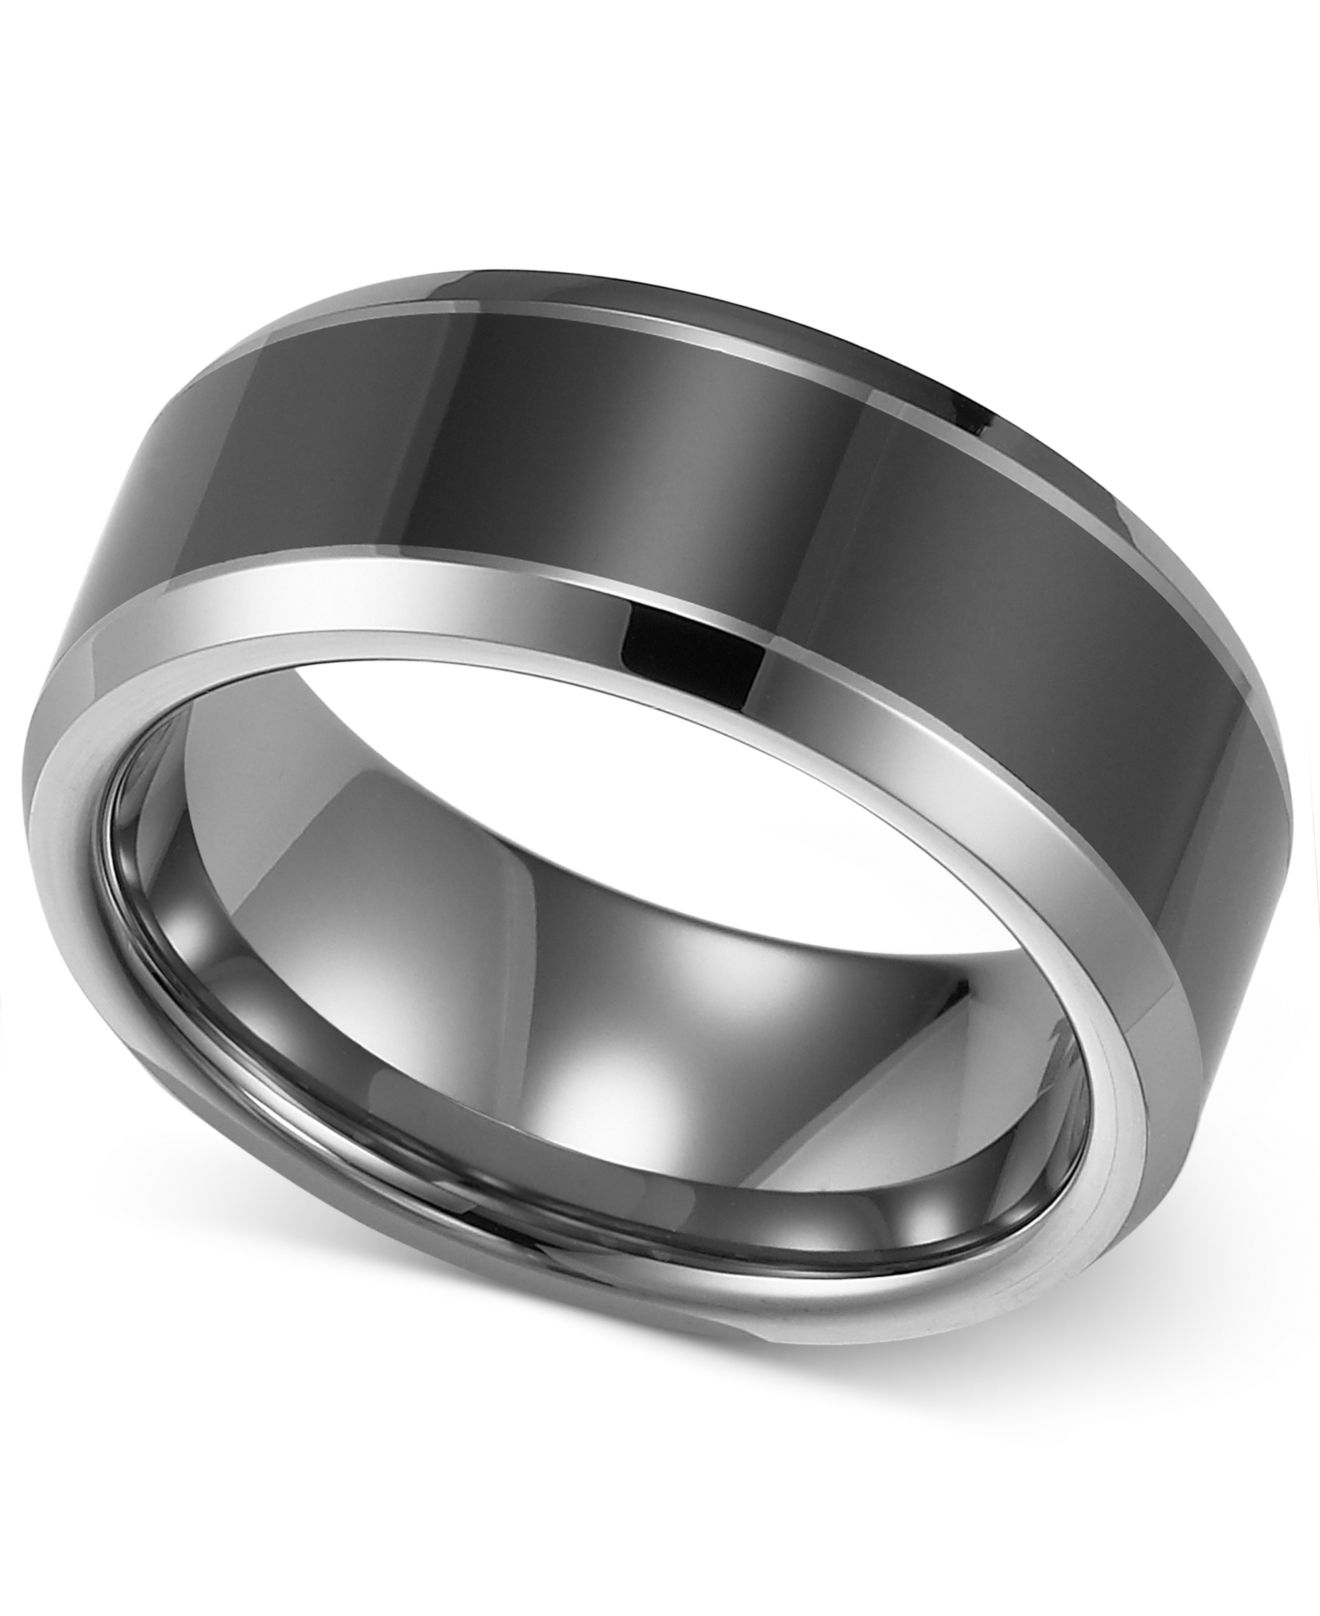 Triton Men's Tungsten Carbide And Ceramic Ring, 8mm Wedding Band in